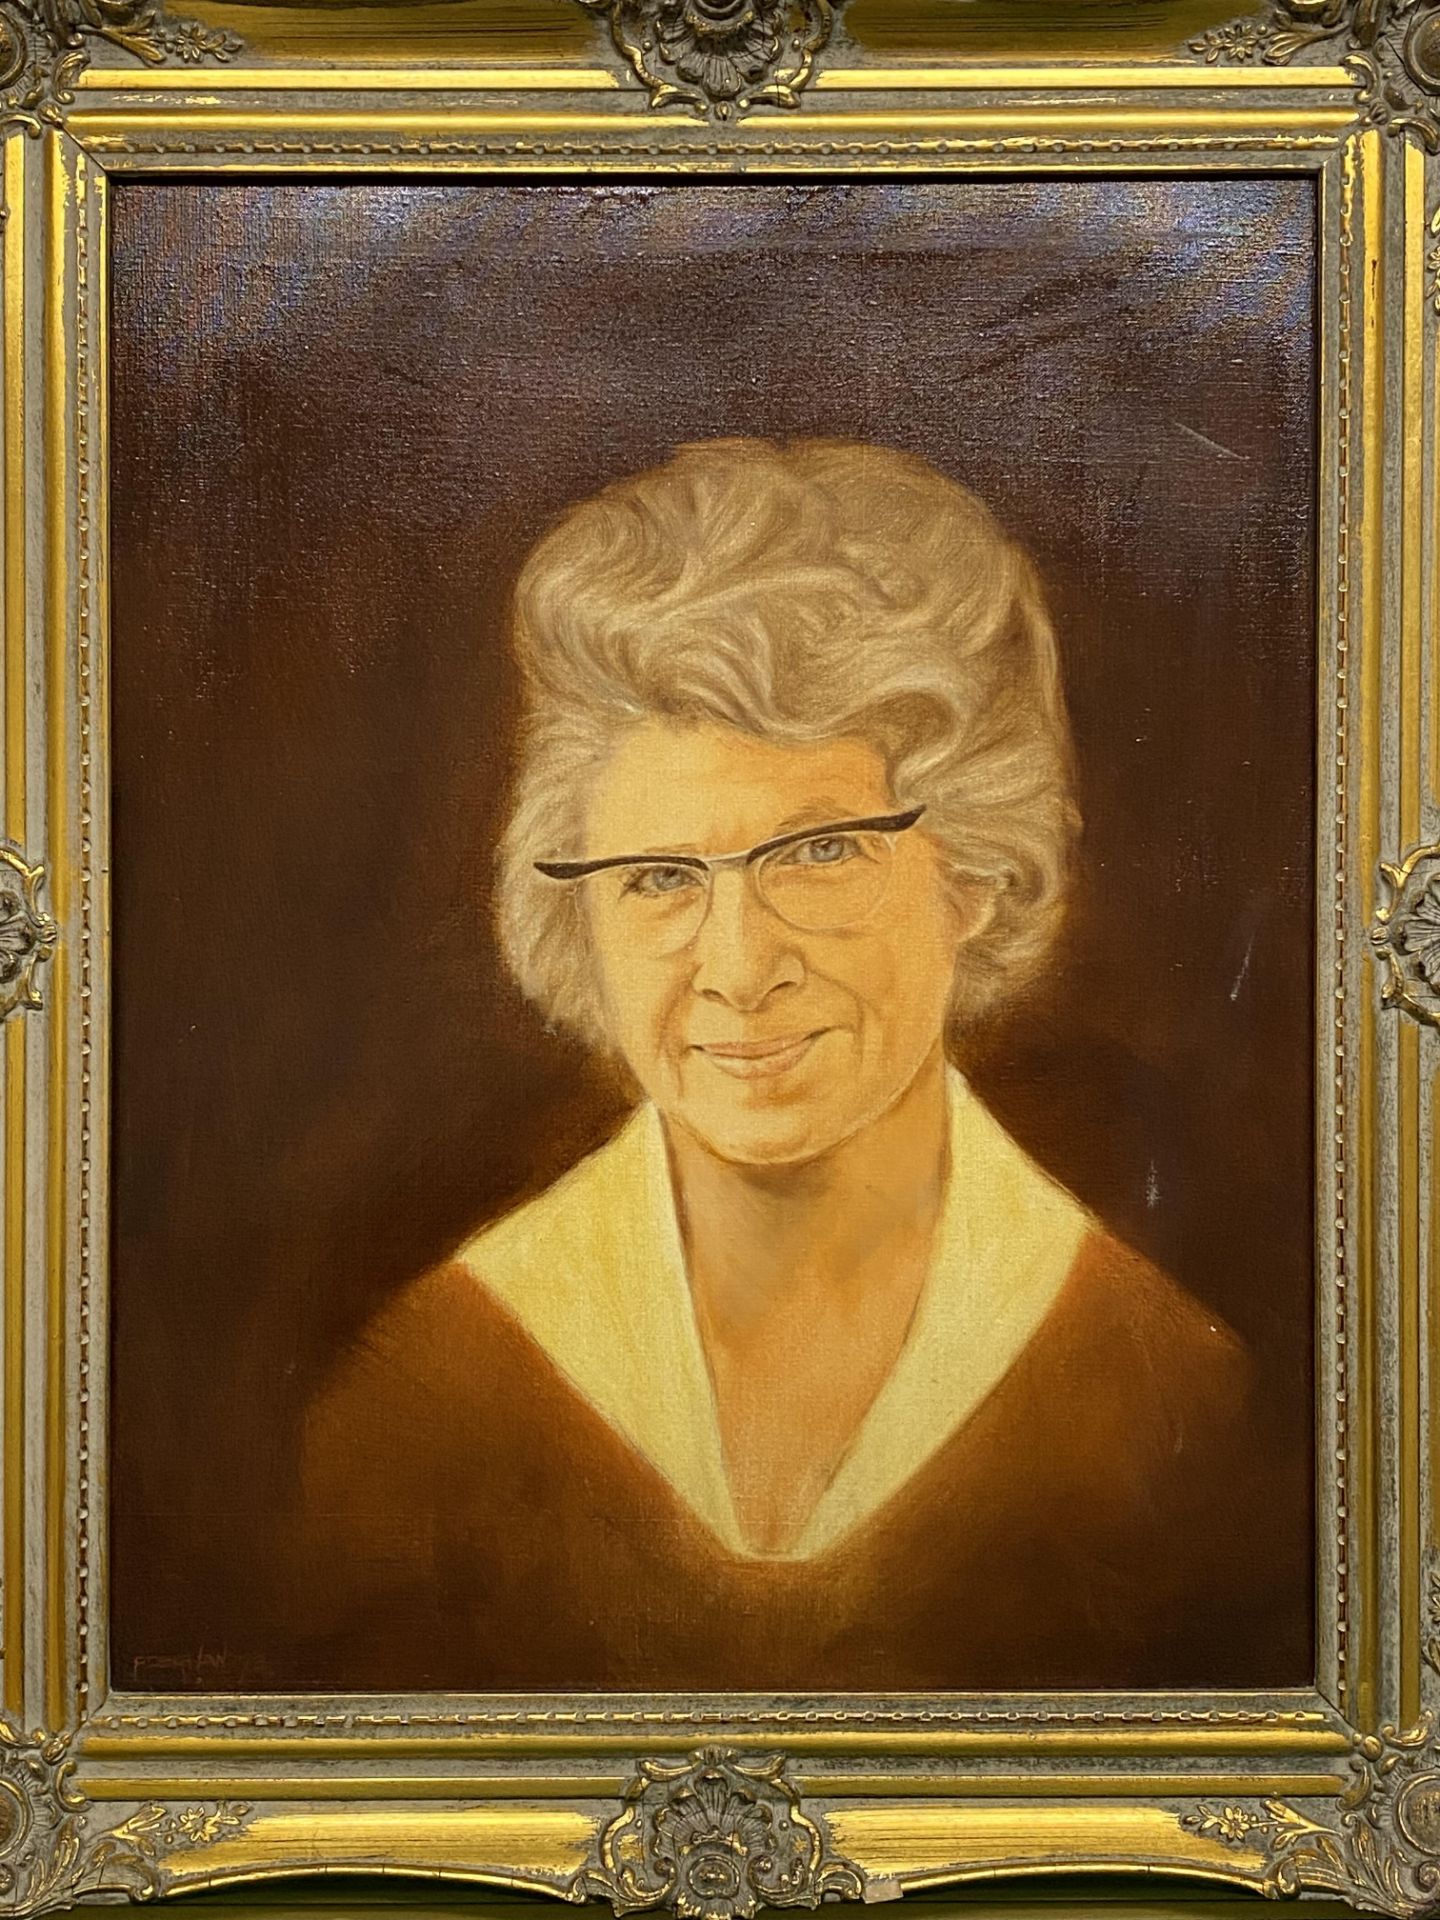 Peter Deighan, framed oil on canvas portrait